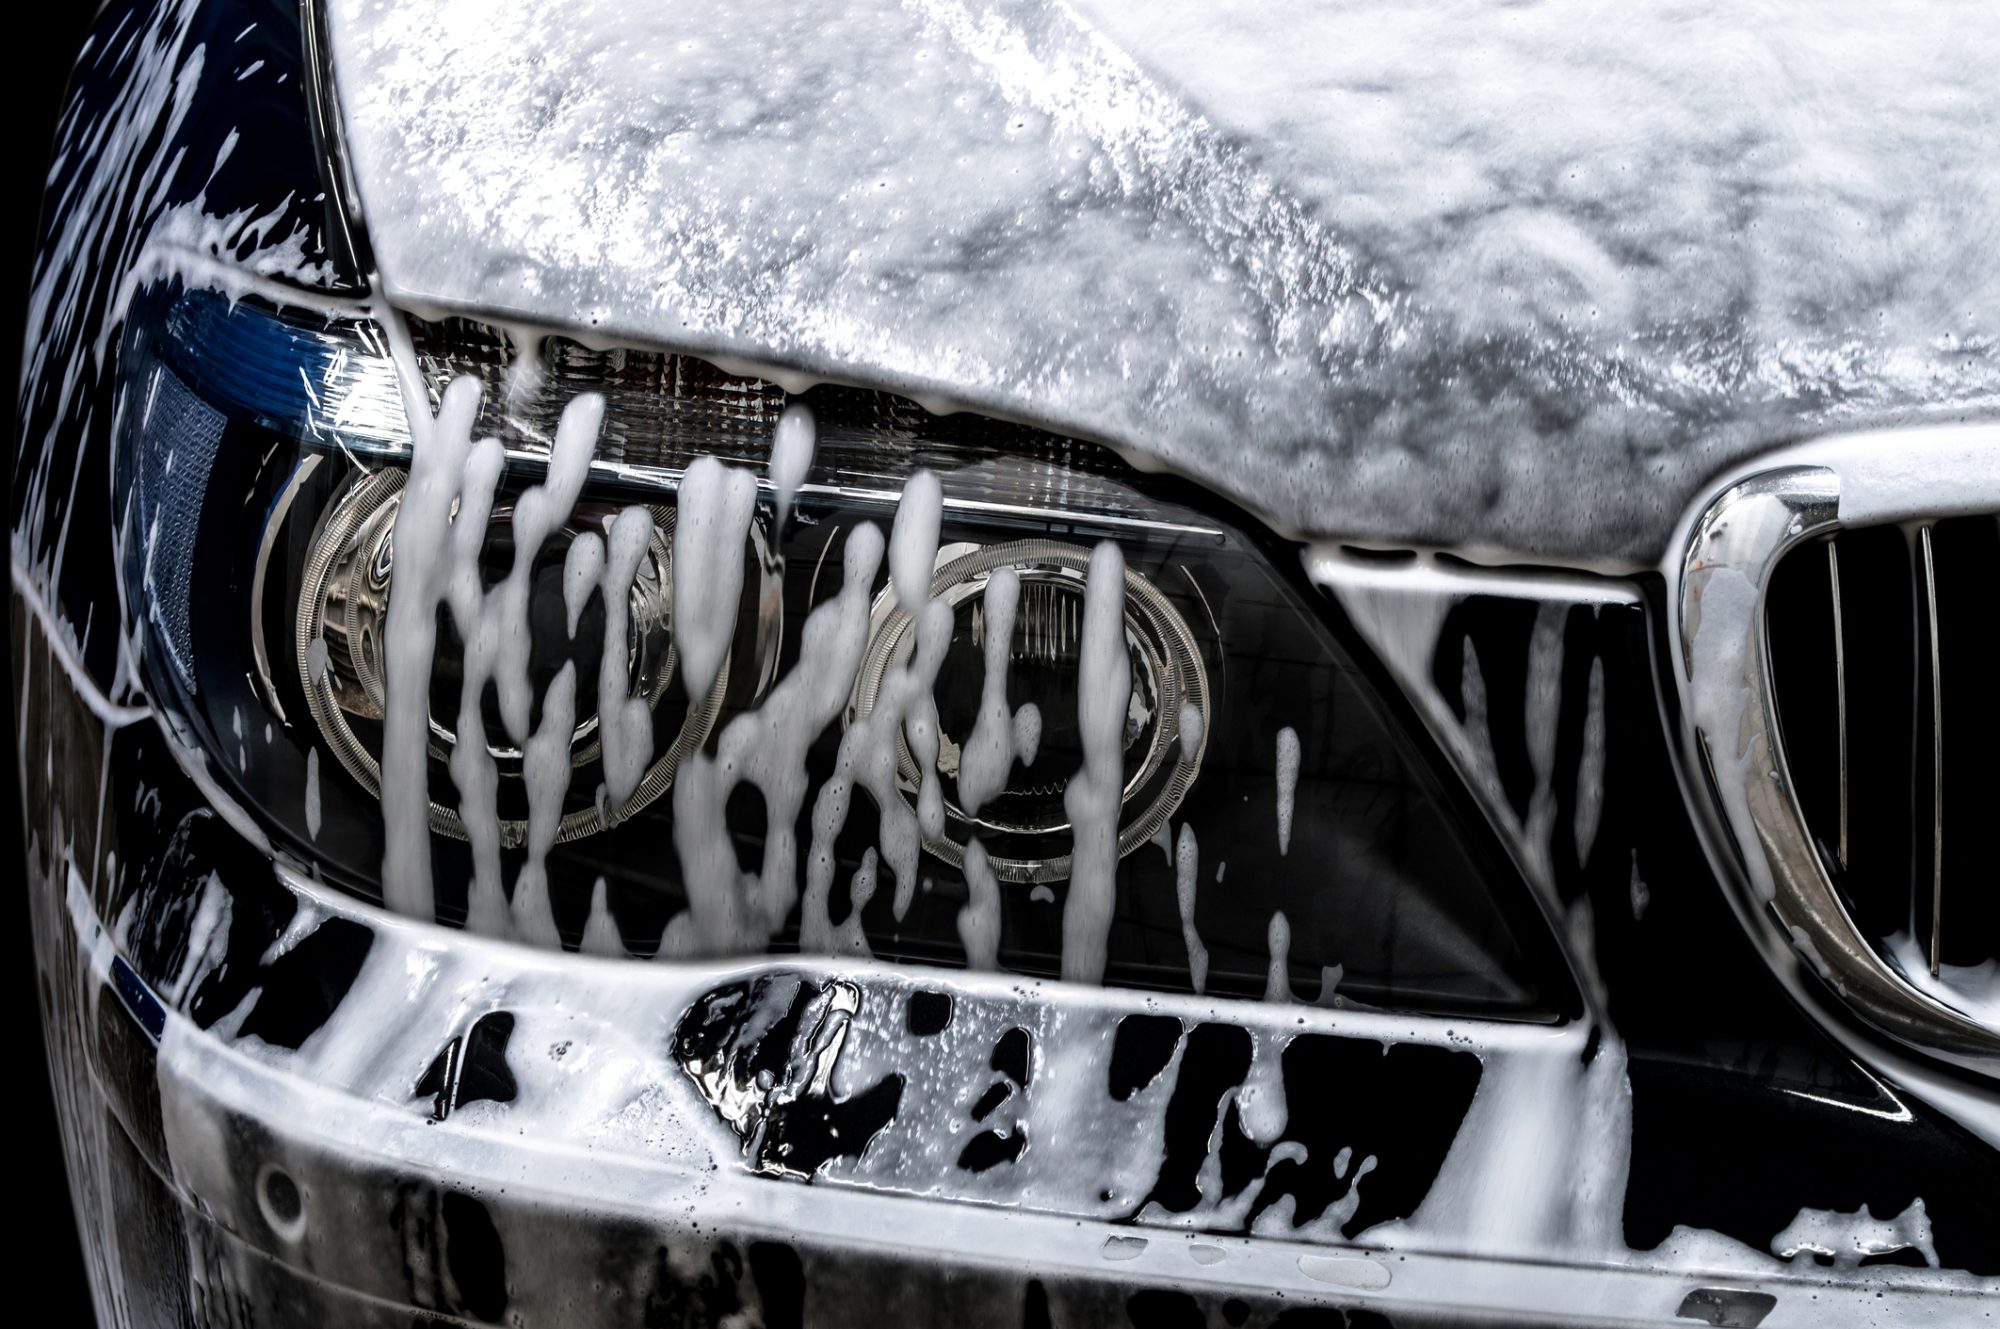 Car wash with soap. Horizontal photo.